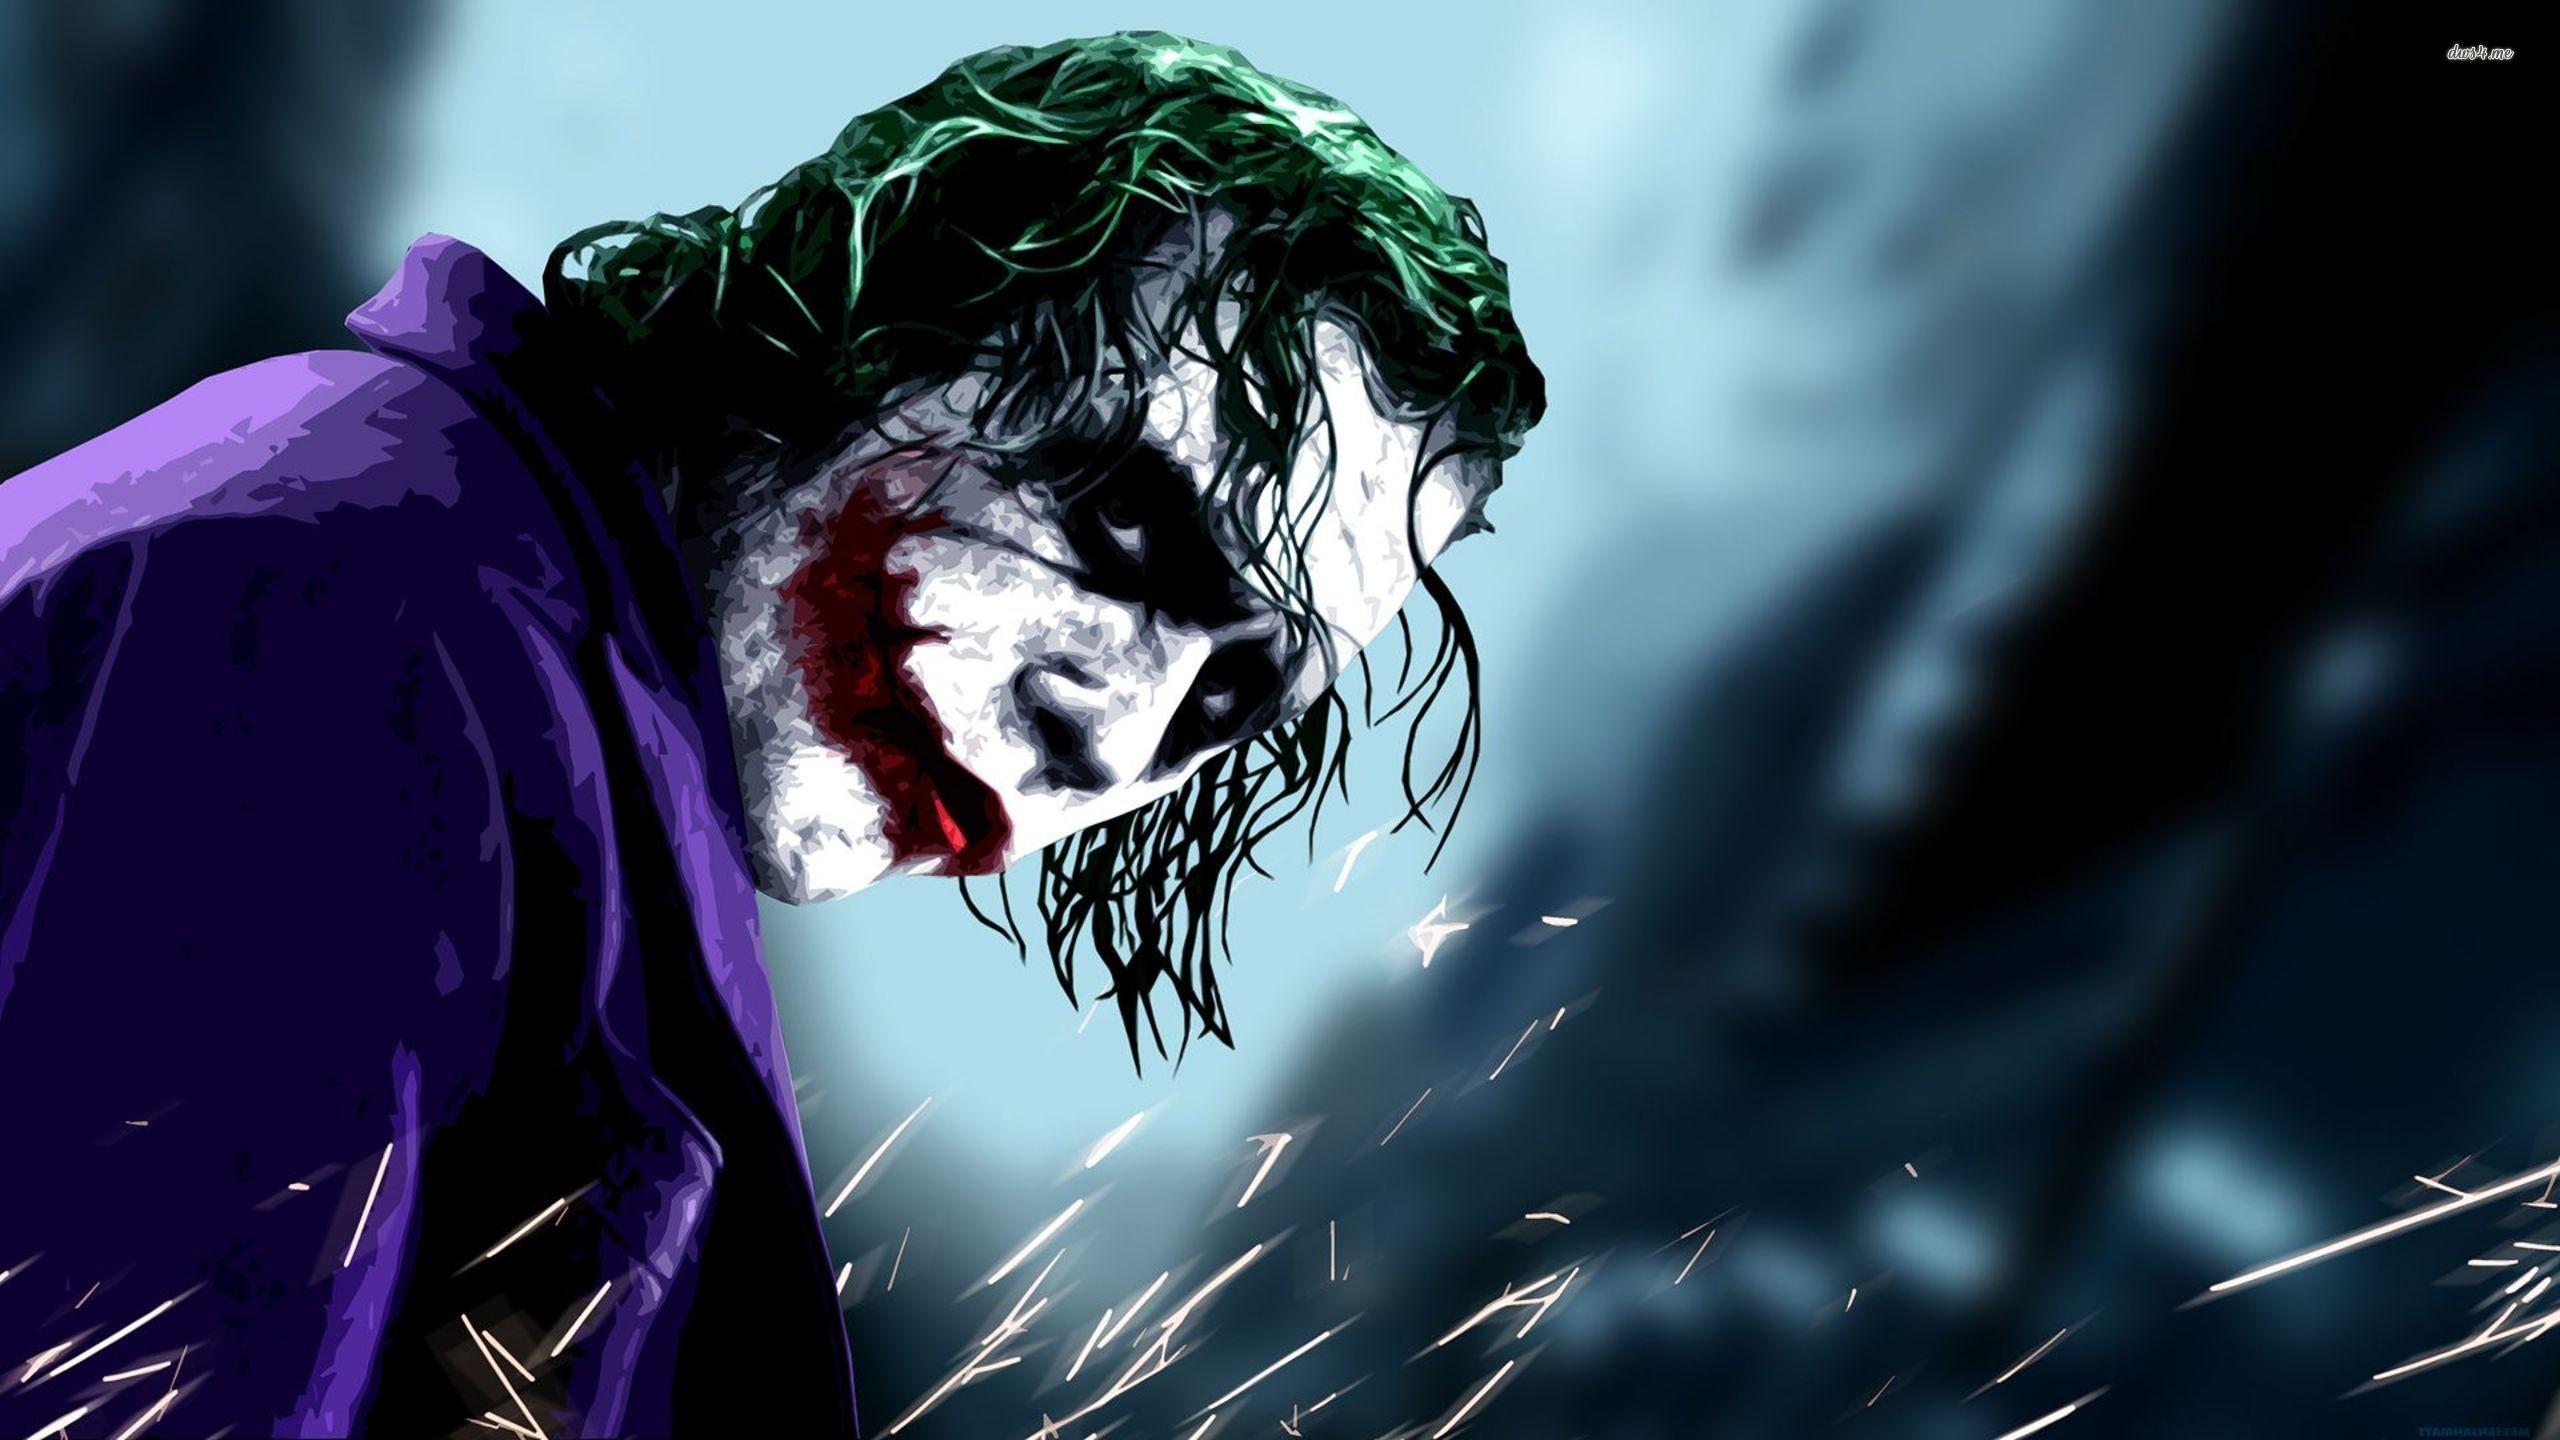 Heath Ledger Joker Wallpaper background picture